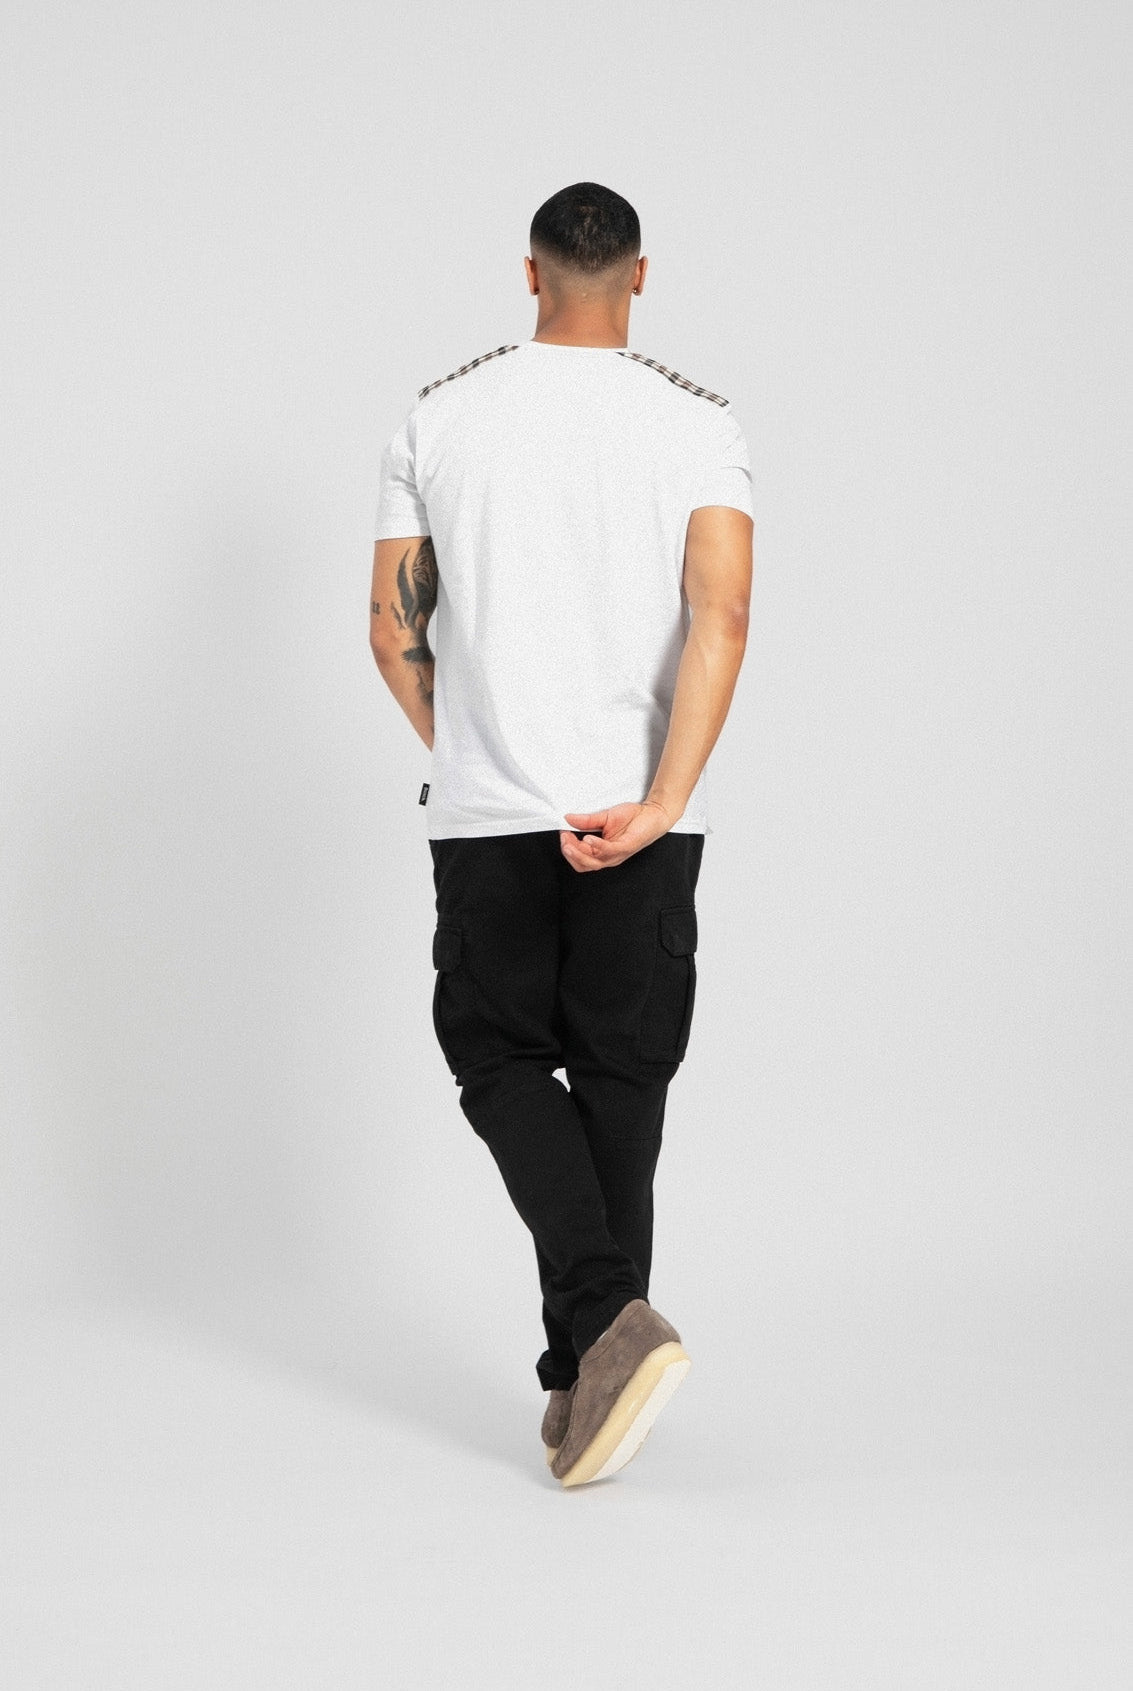 Mens 'DUKE' T-Shirt - WHITE - Shop at www.Bench.co.uk #LoveMyHood